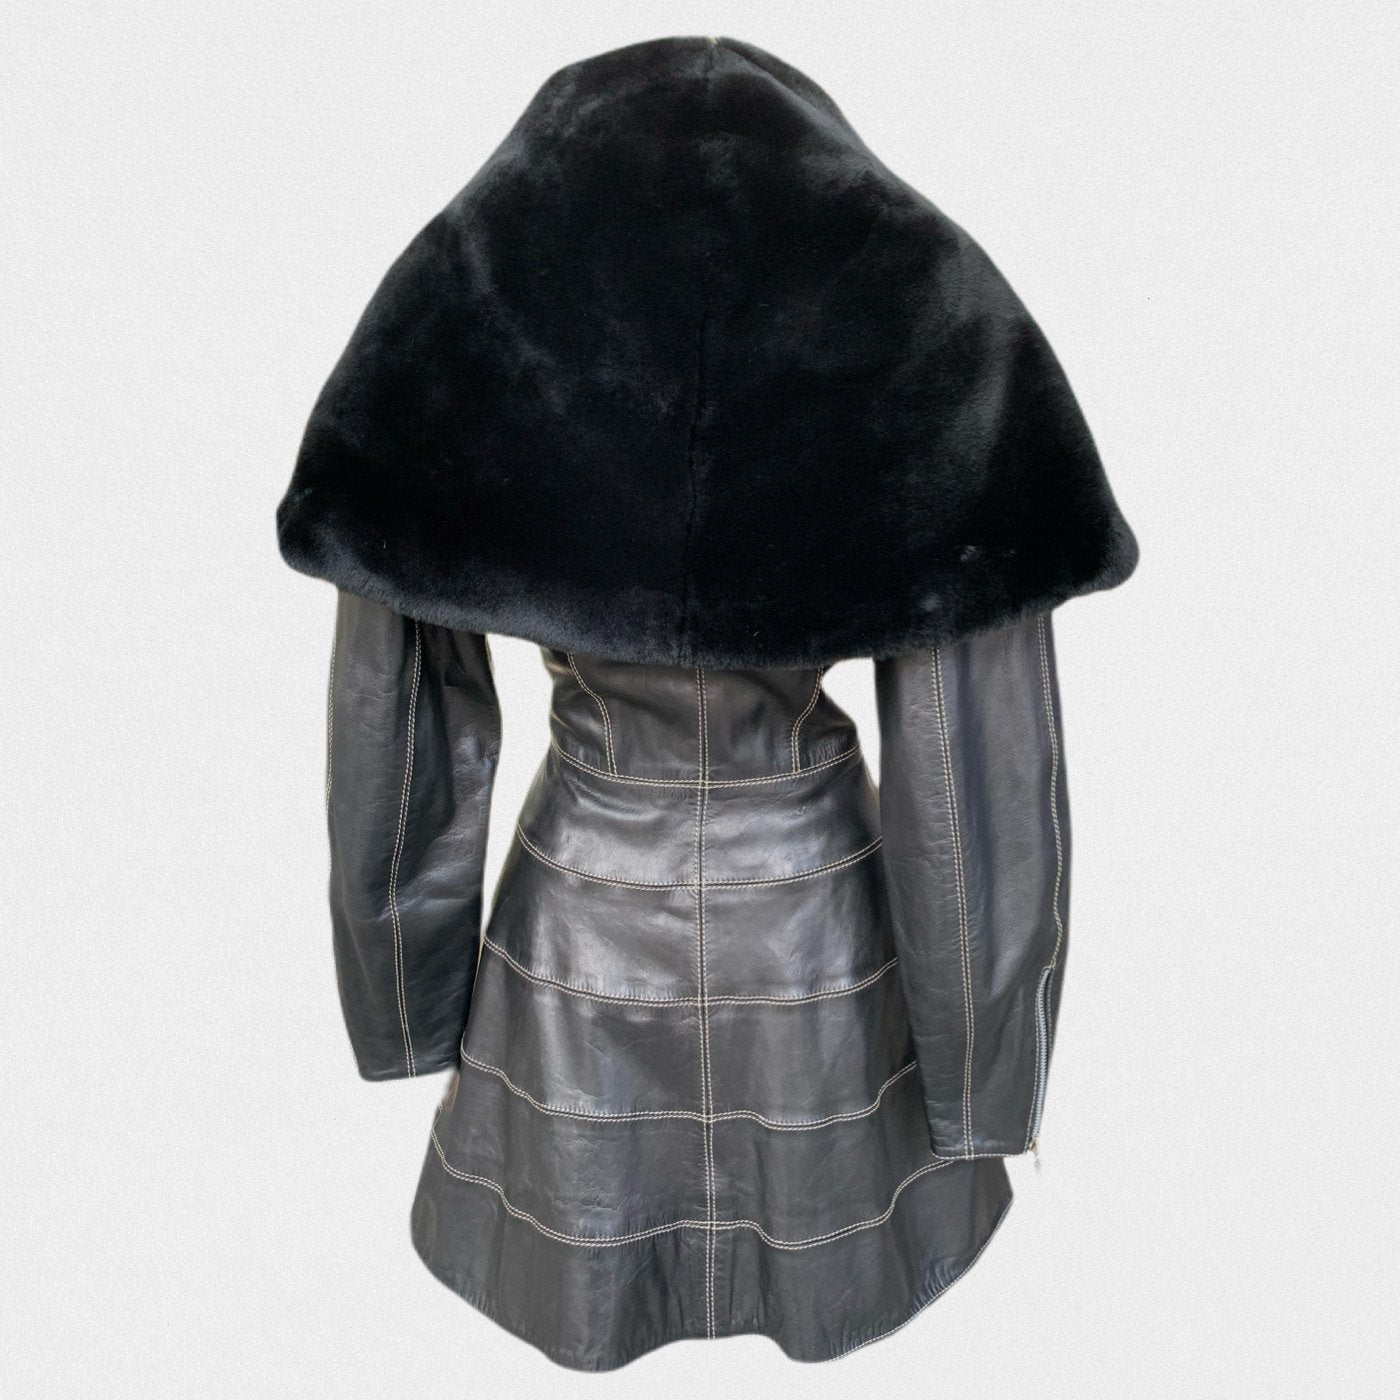 Lysis vintage Claude Montana Ideal leather winter coat - M - 1992